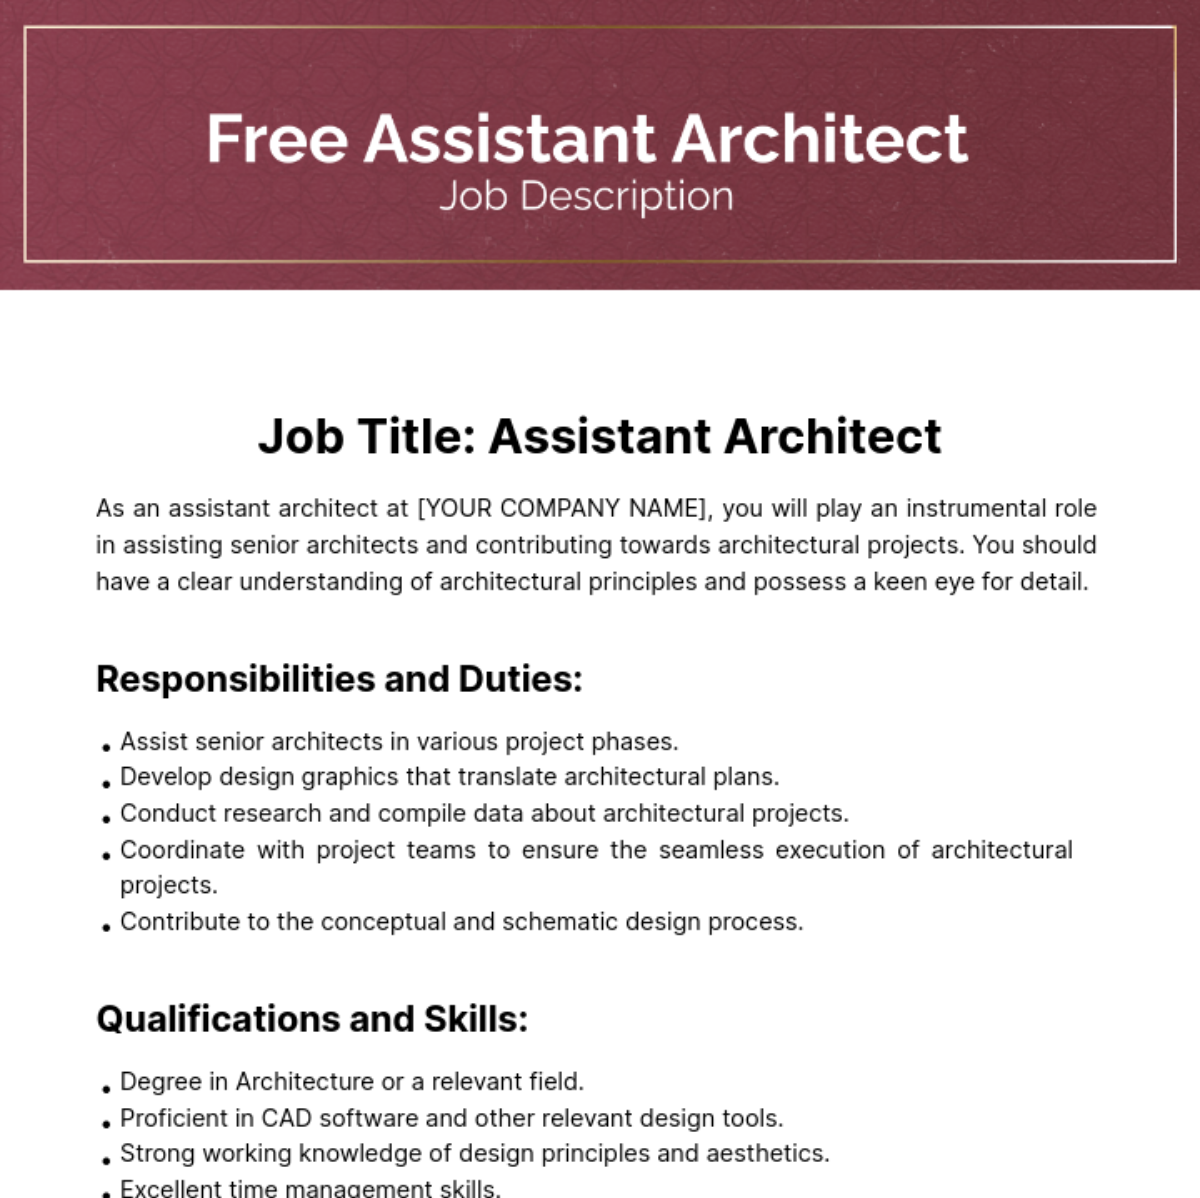 Free Architect Job Description Template